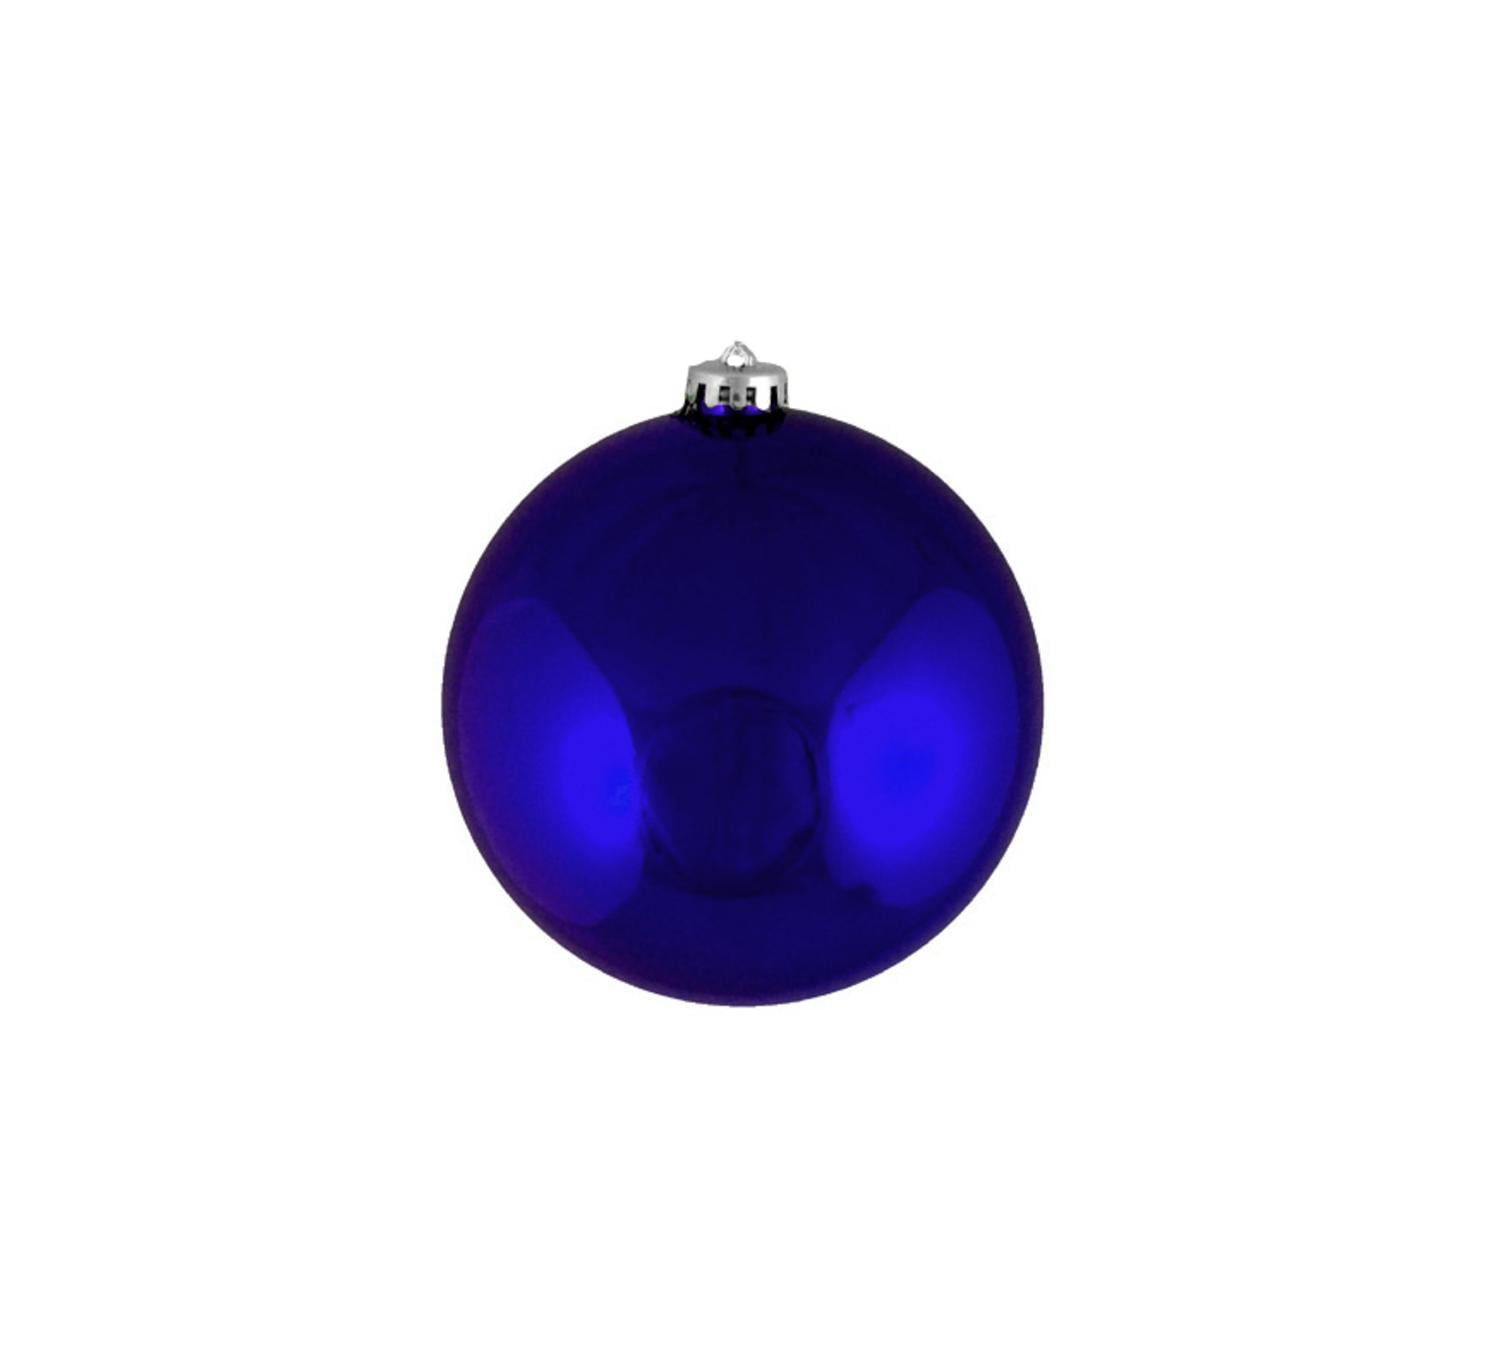 12ct Shatterproof Shiny Royal Blue Christmas Ball Ornaments 4" (100mm) - Walmart.com - Walmart.com